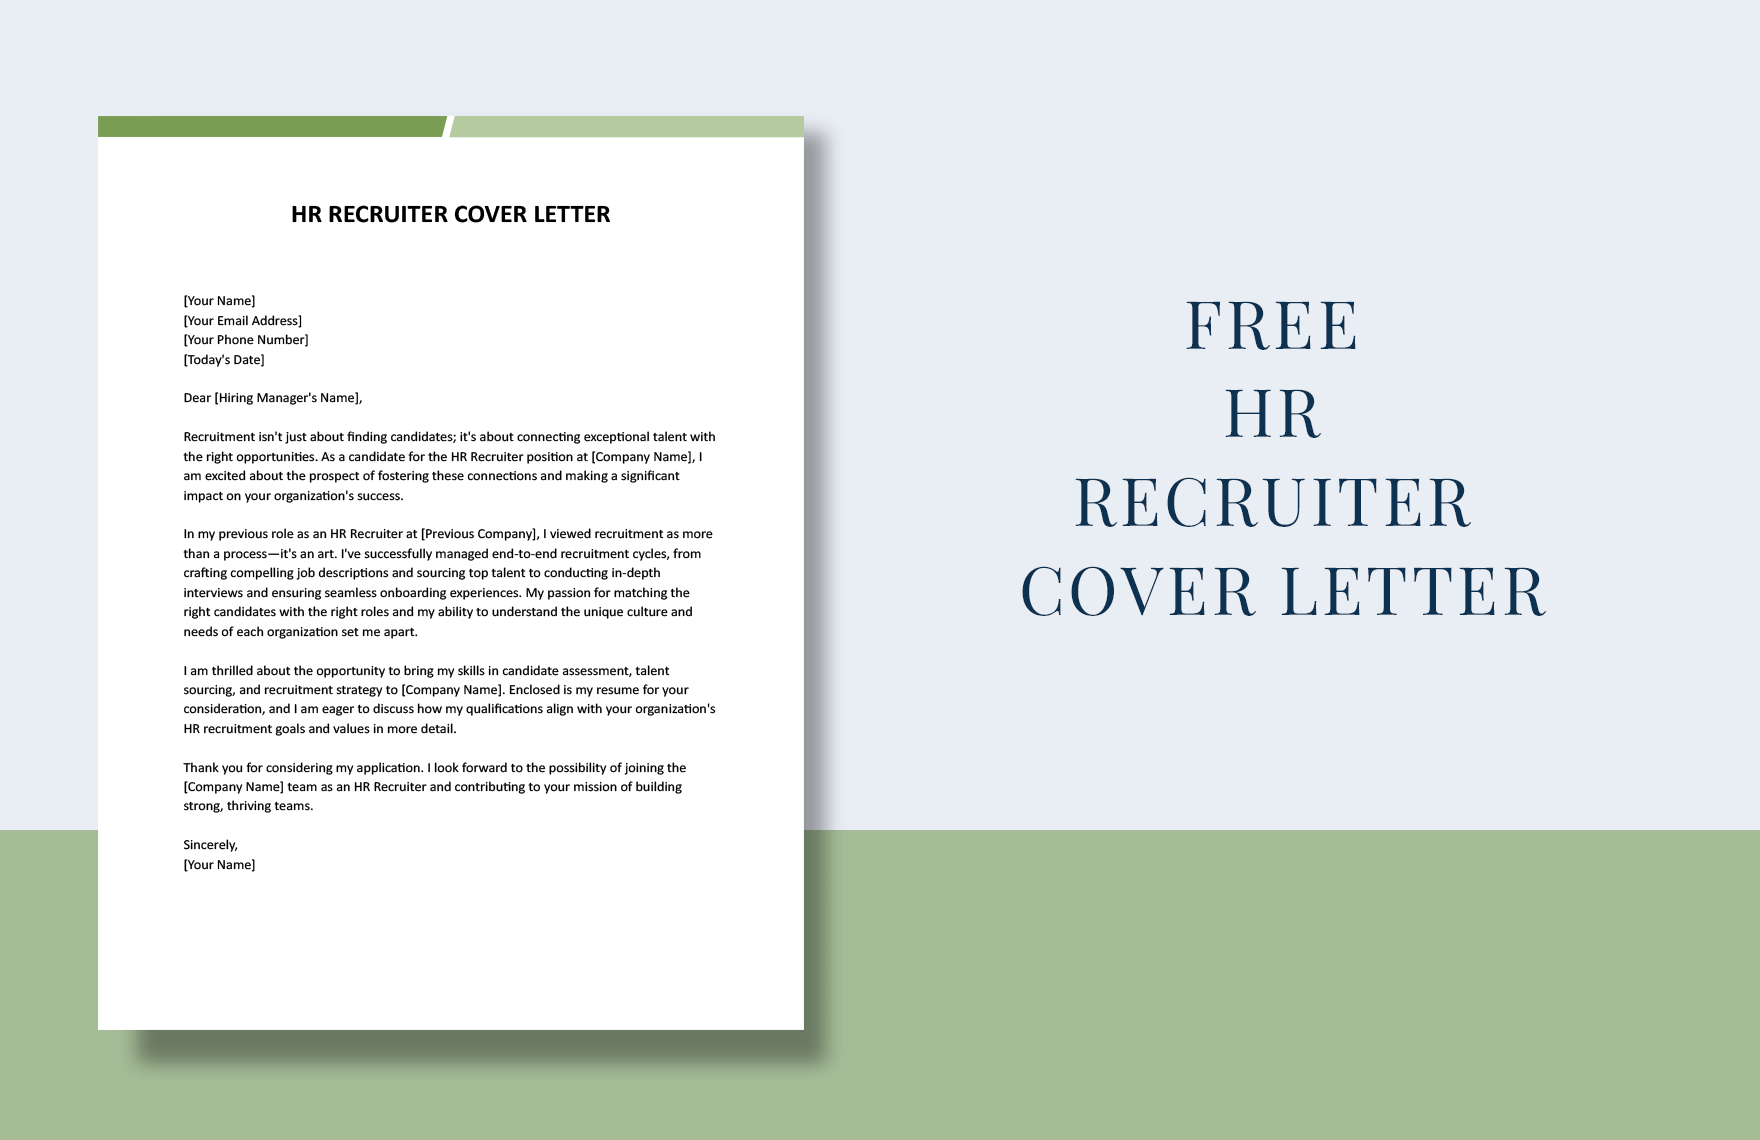 HR Recruiter Cover Letter in Word, Google Docs